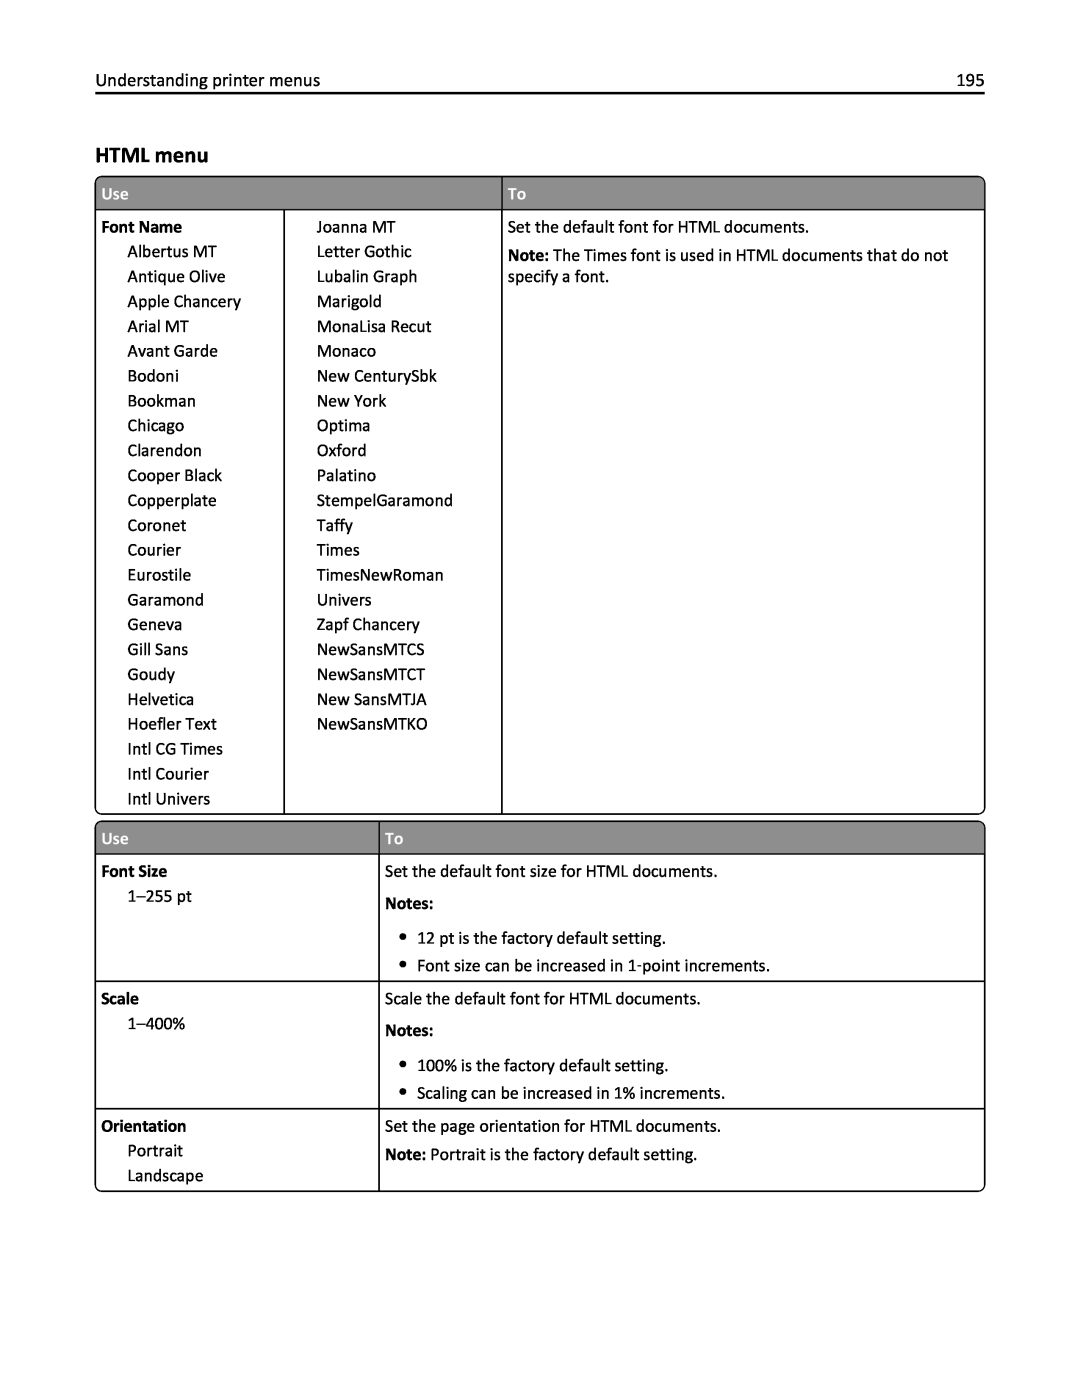 Lexmark 436 manual HTML menu, Font Name, Font Size, Scale, Orientation 